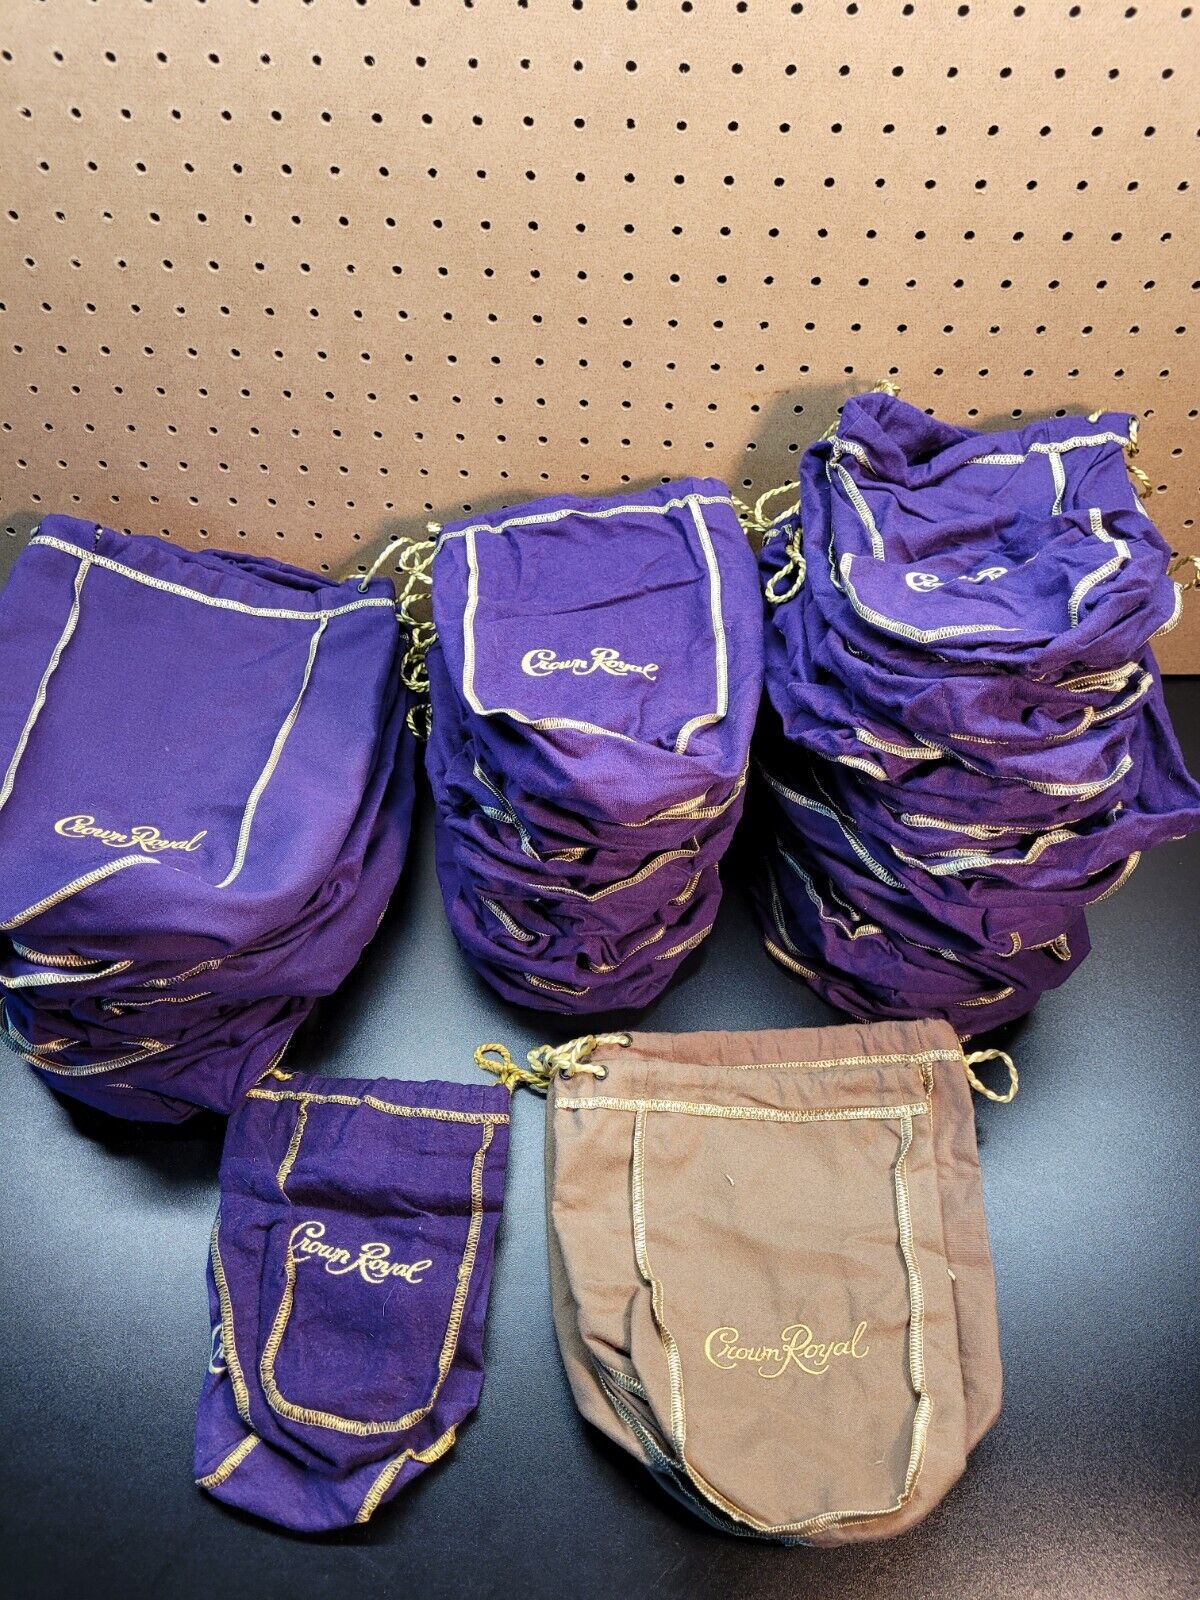 Lot of 63 Crown Royal Bags - Small Medium Large Tan Purple